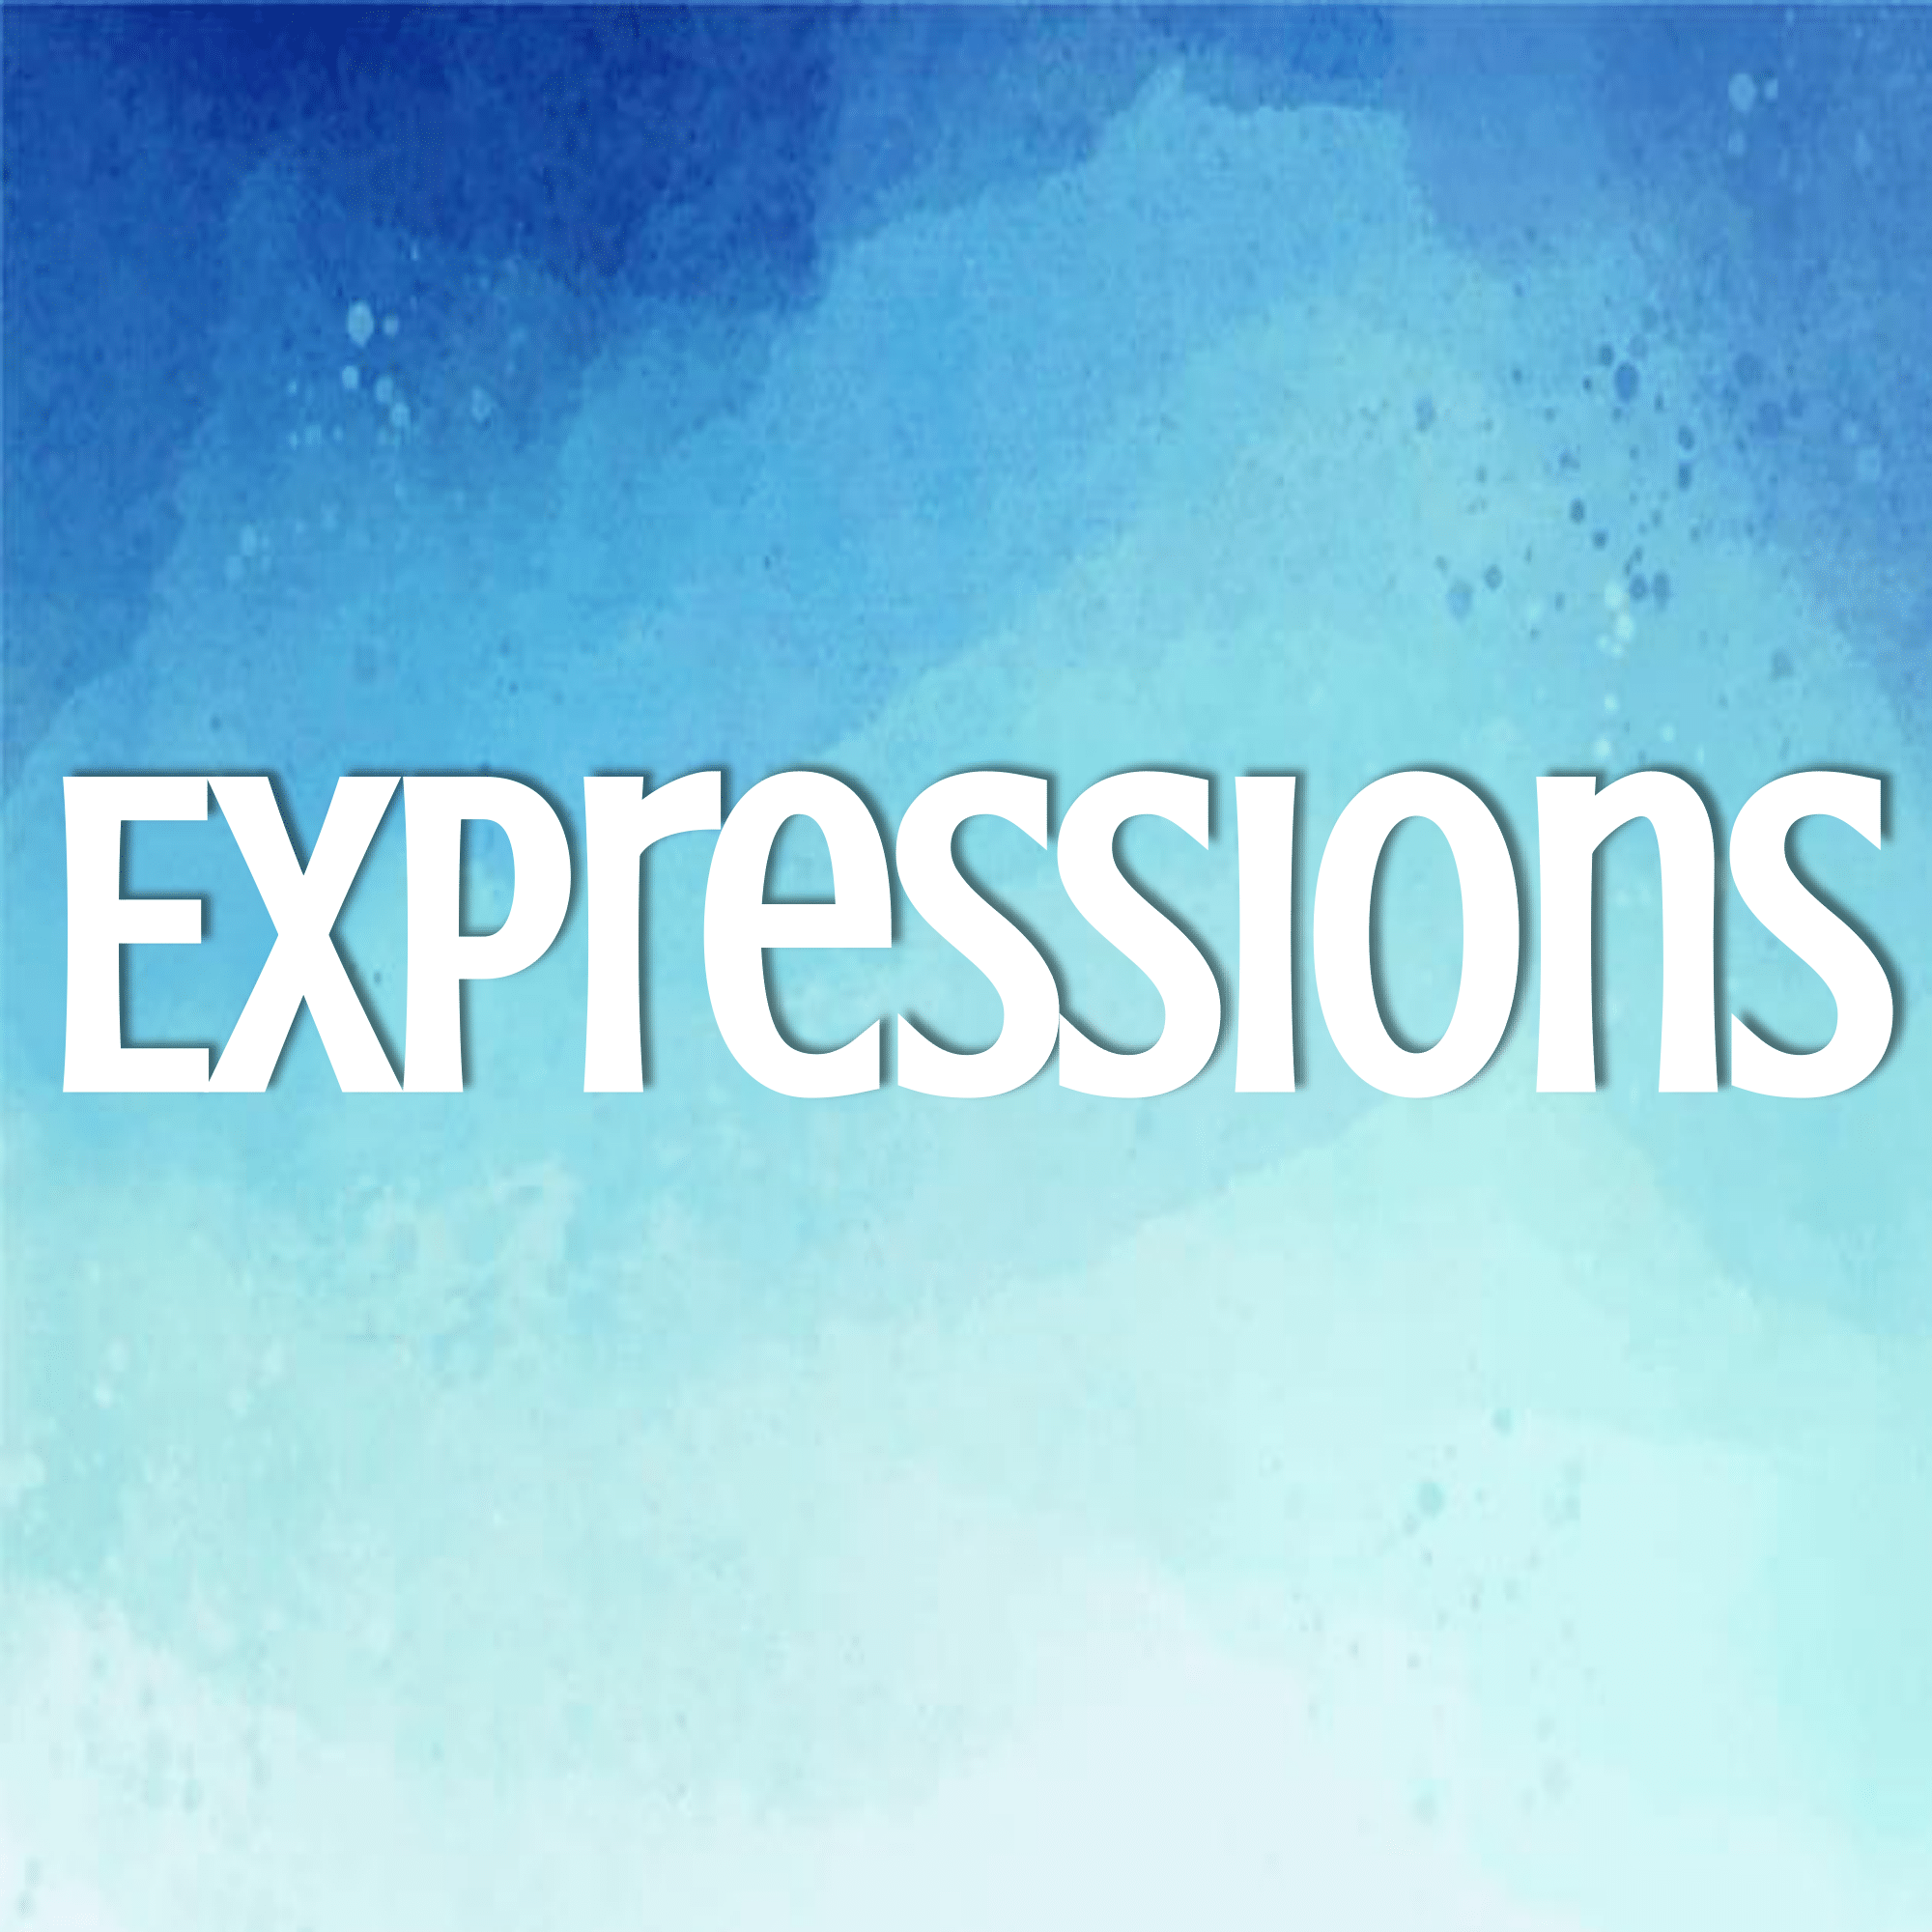 Expressions - Class 7 - Quizizz